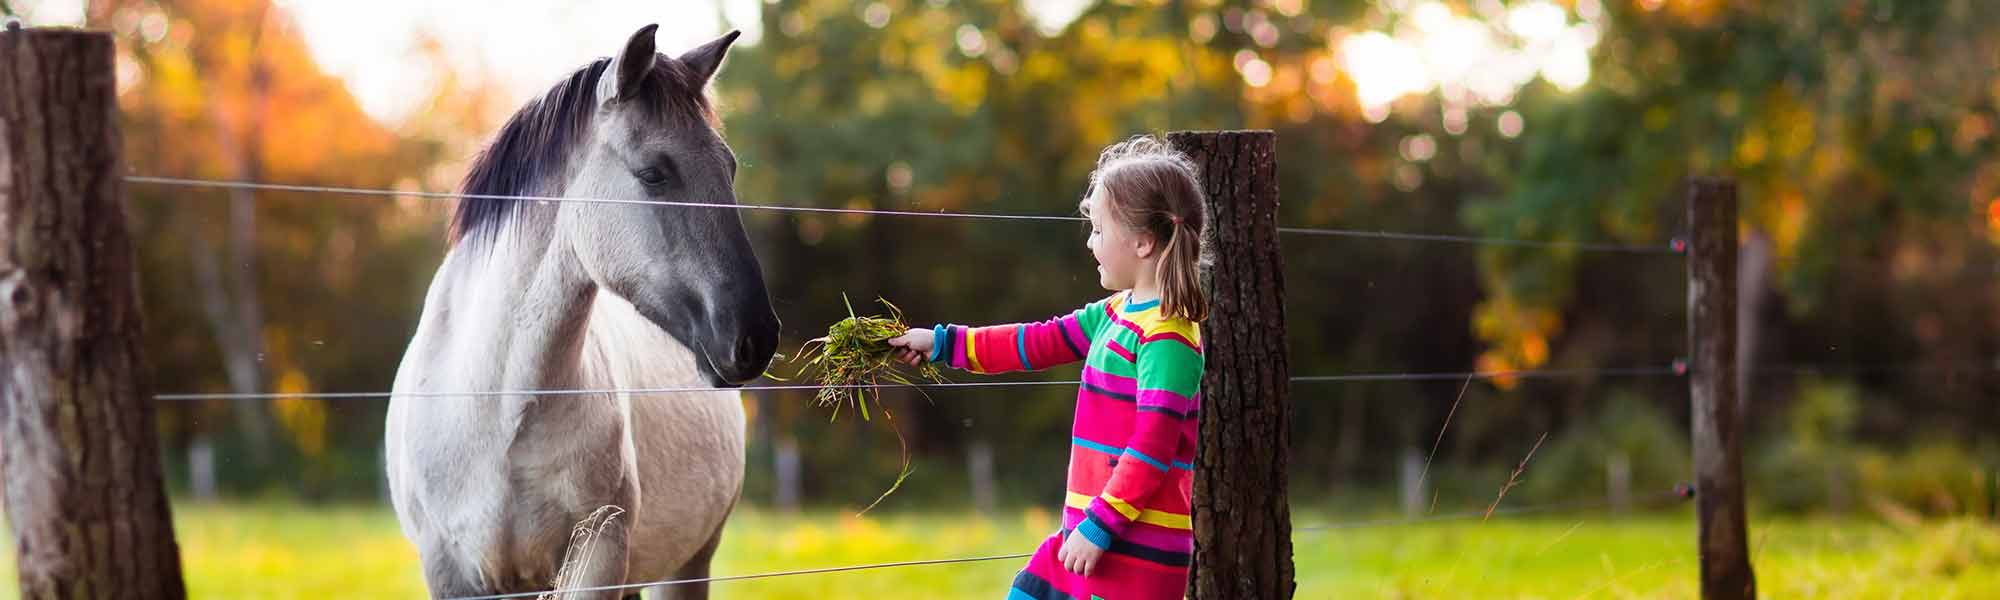 Little girl feeding a pony grass